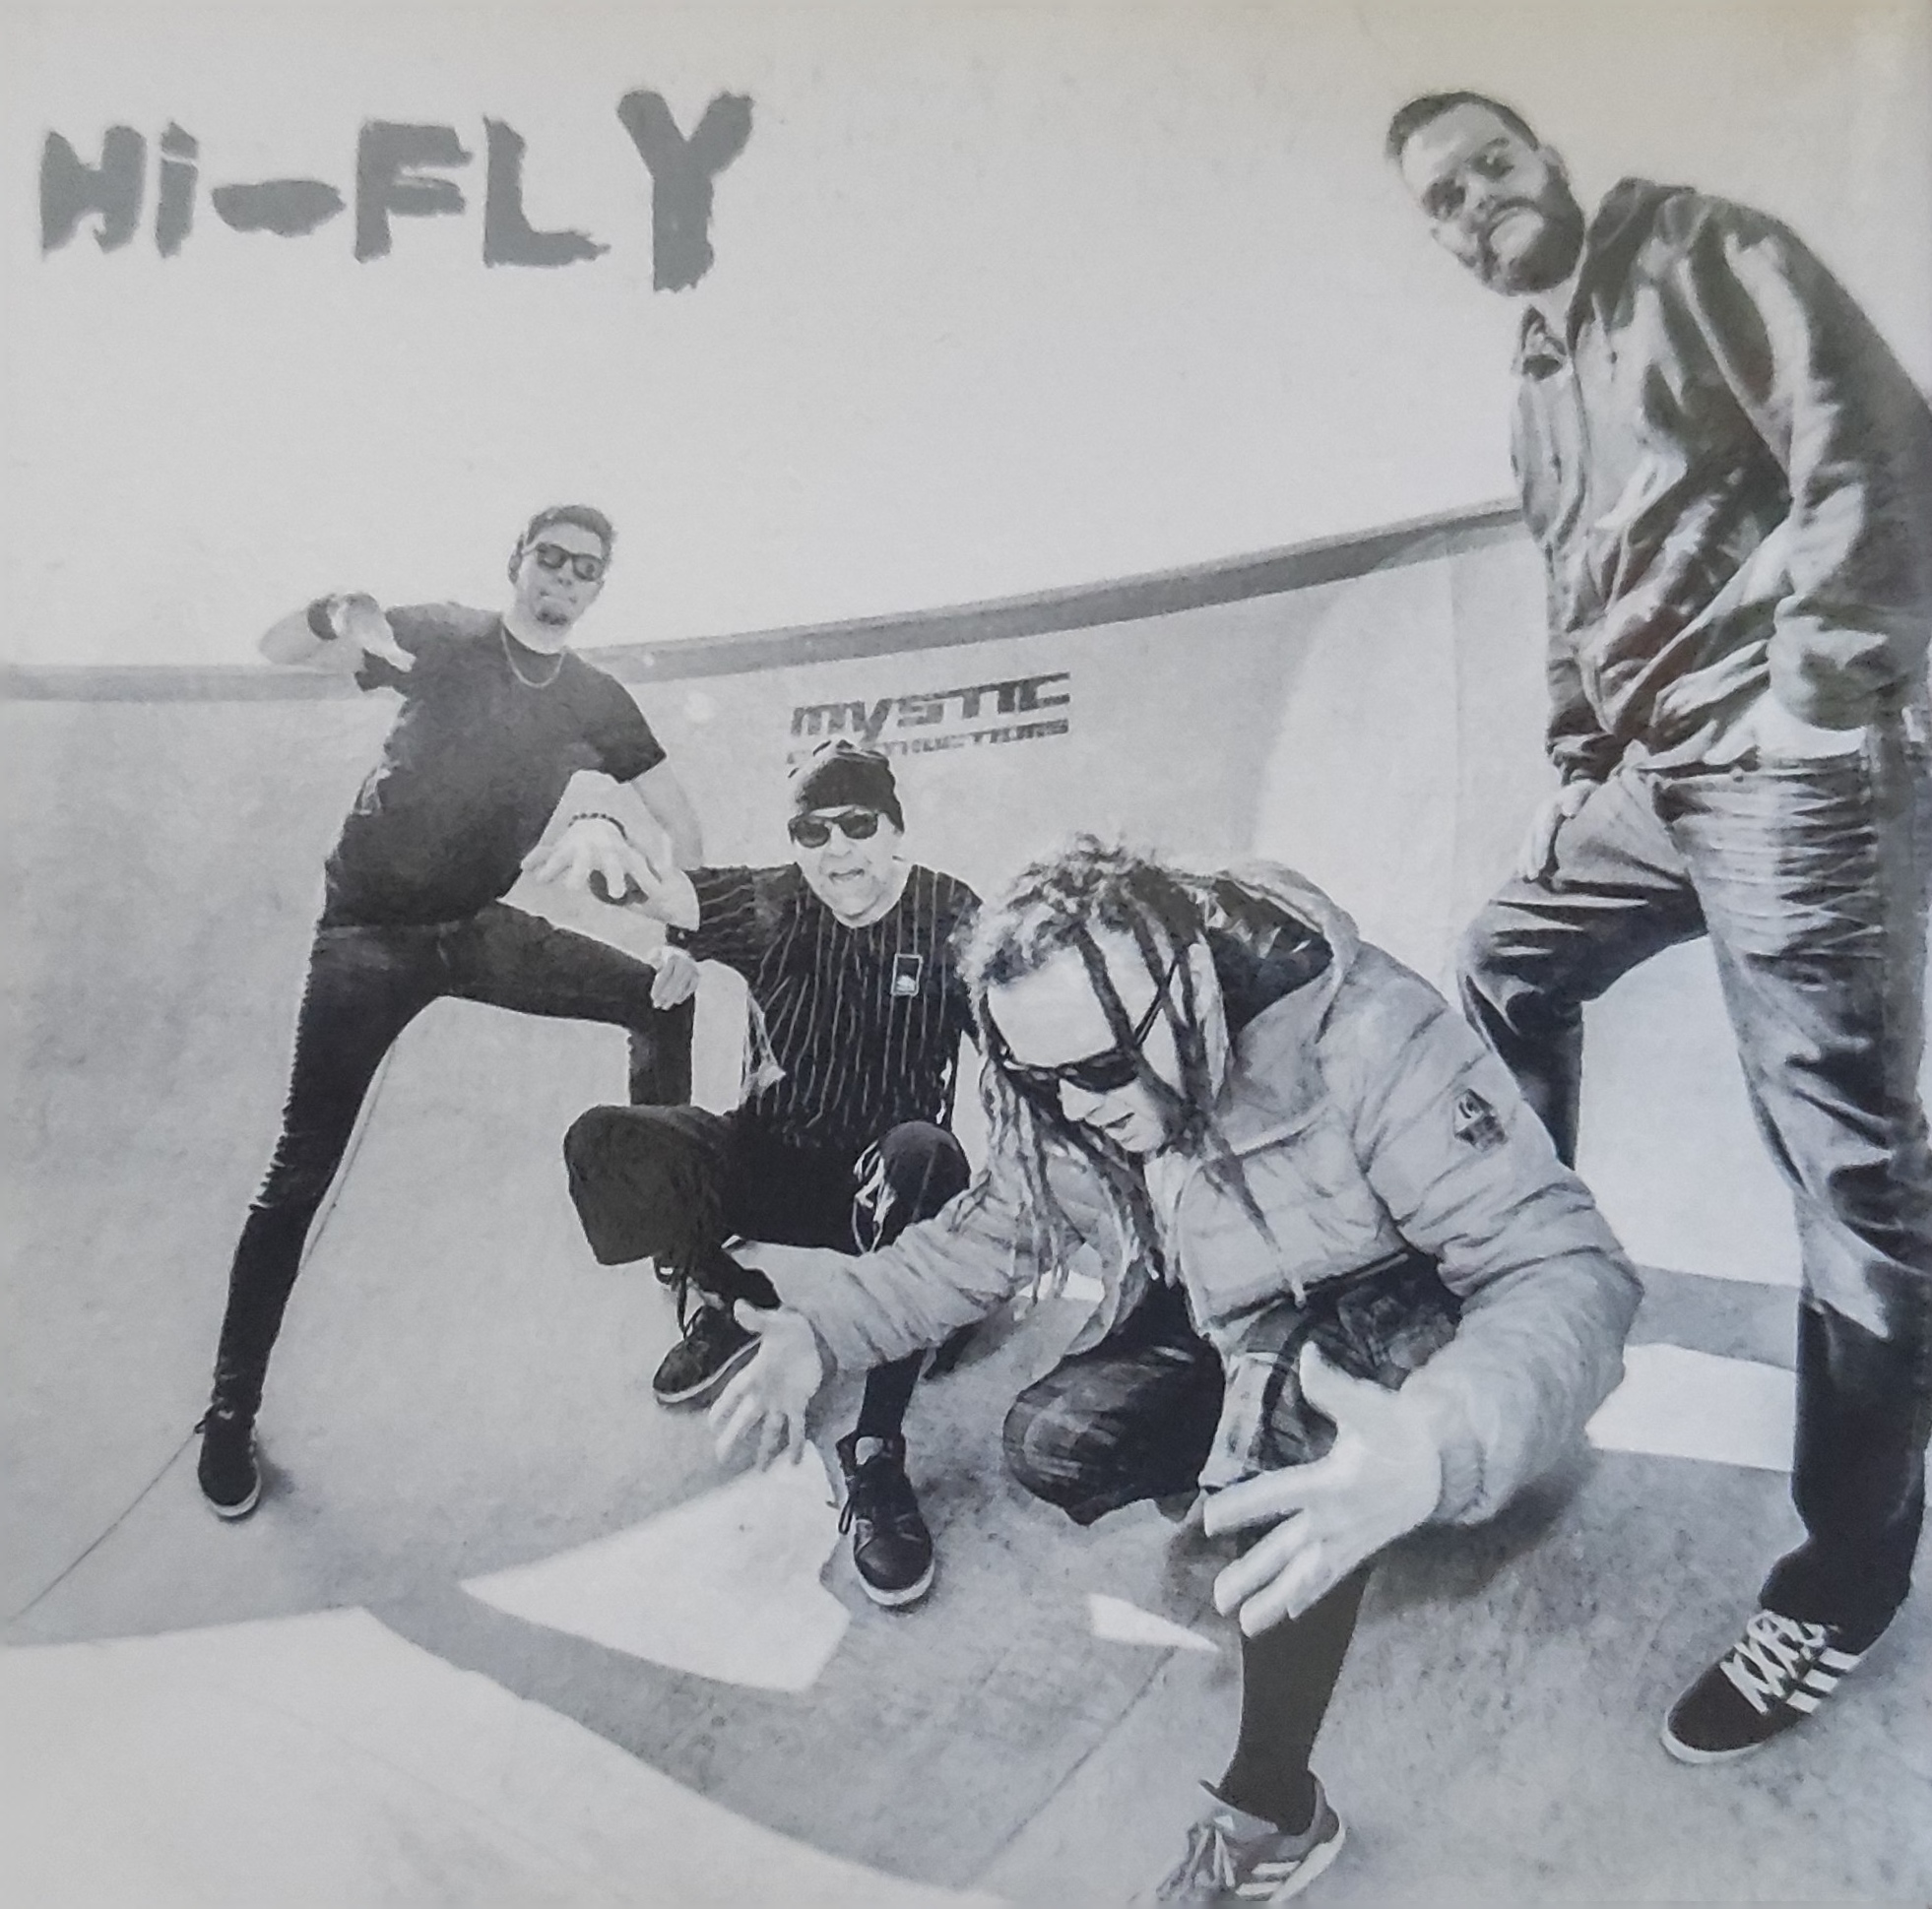 HI-FLY - Diskografie